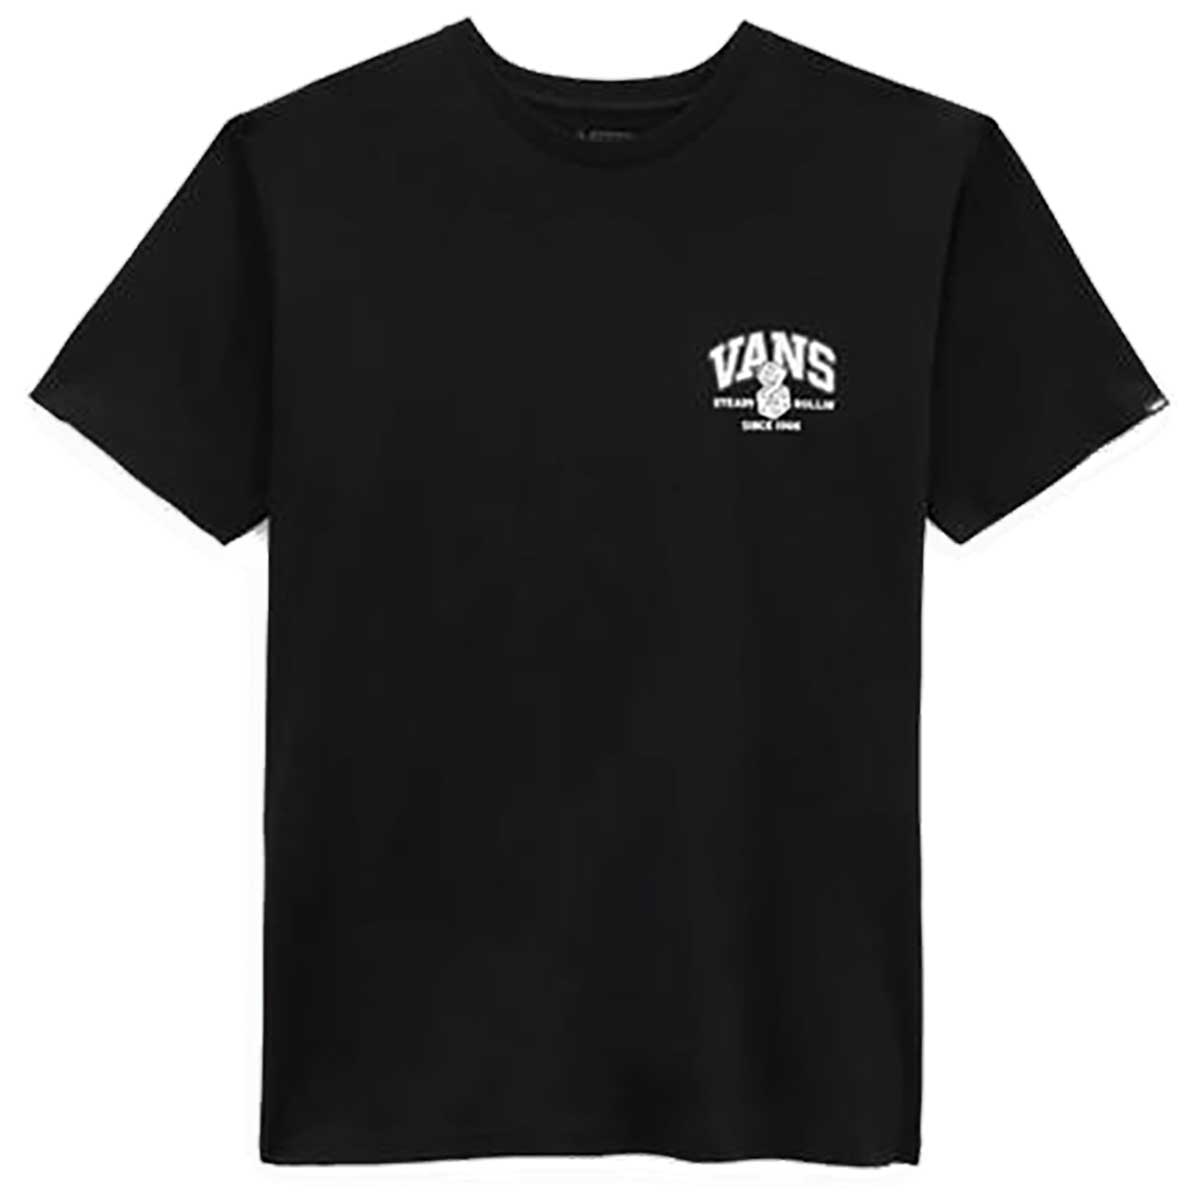 Vans Steady Rollin T-Shirt - Black